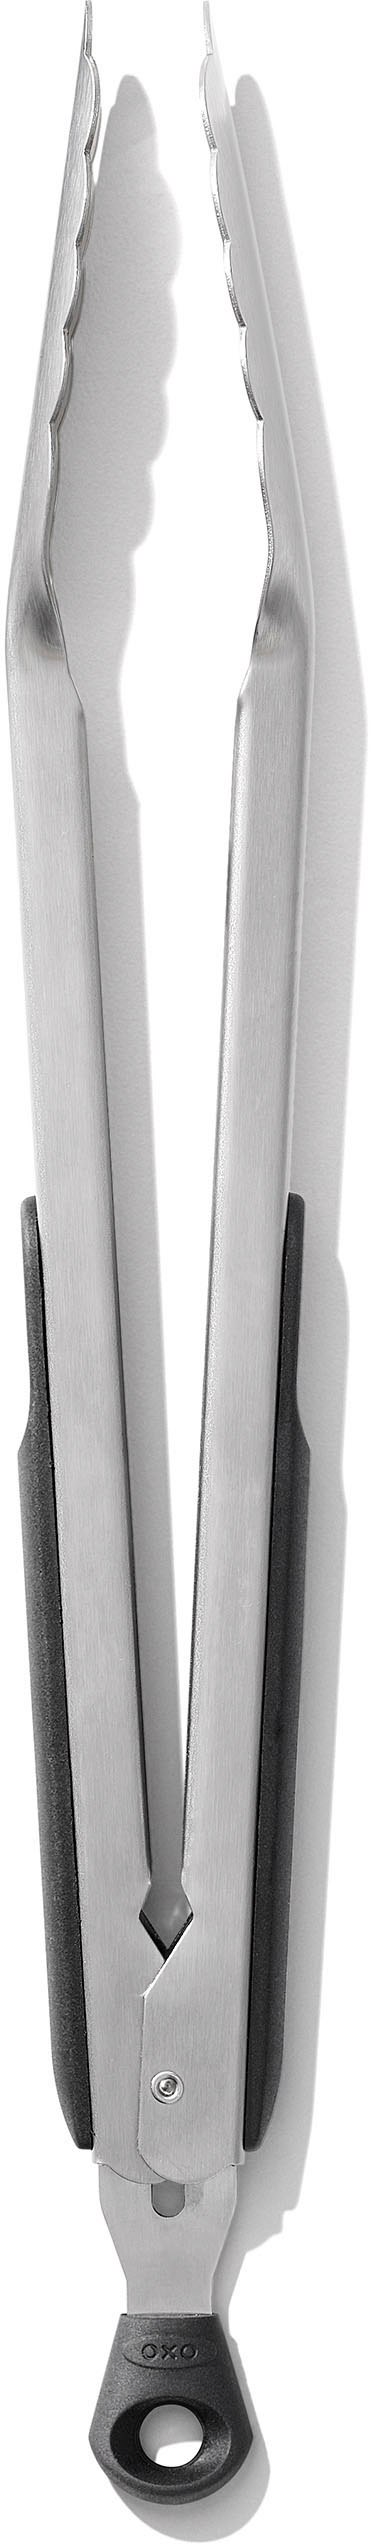 Fingerhut - OXO Good Grips 15-Pc. Stainless Steel Everyday Kitchen